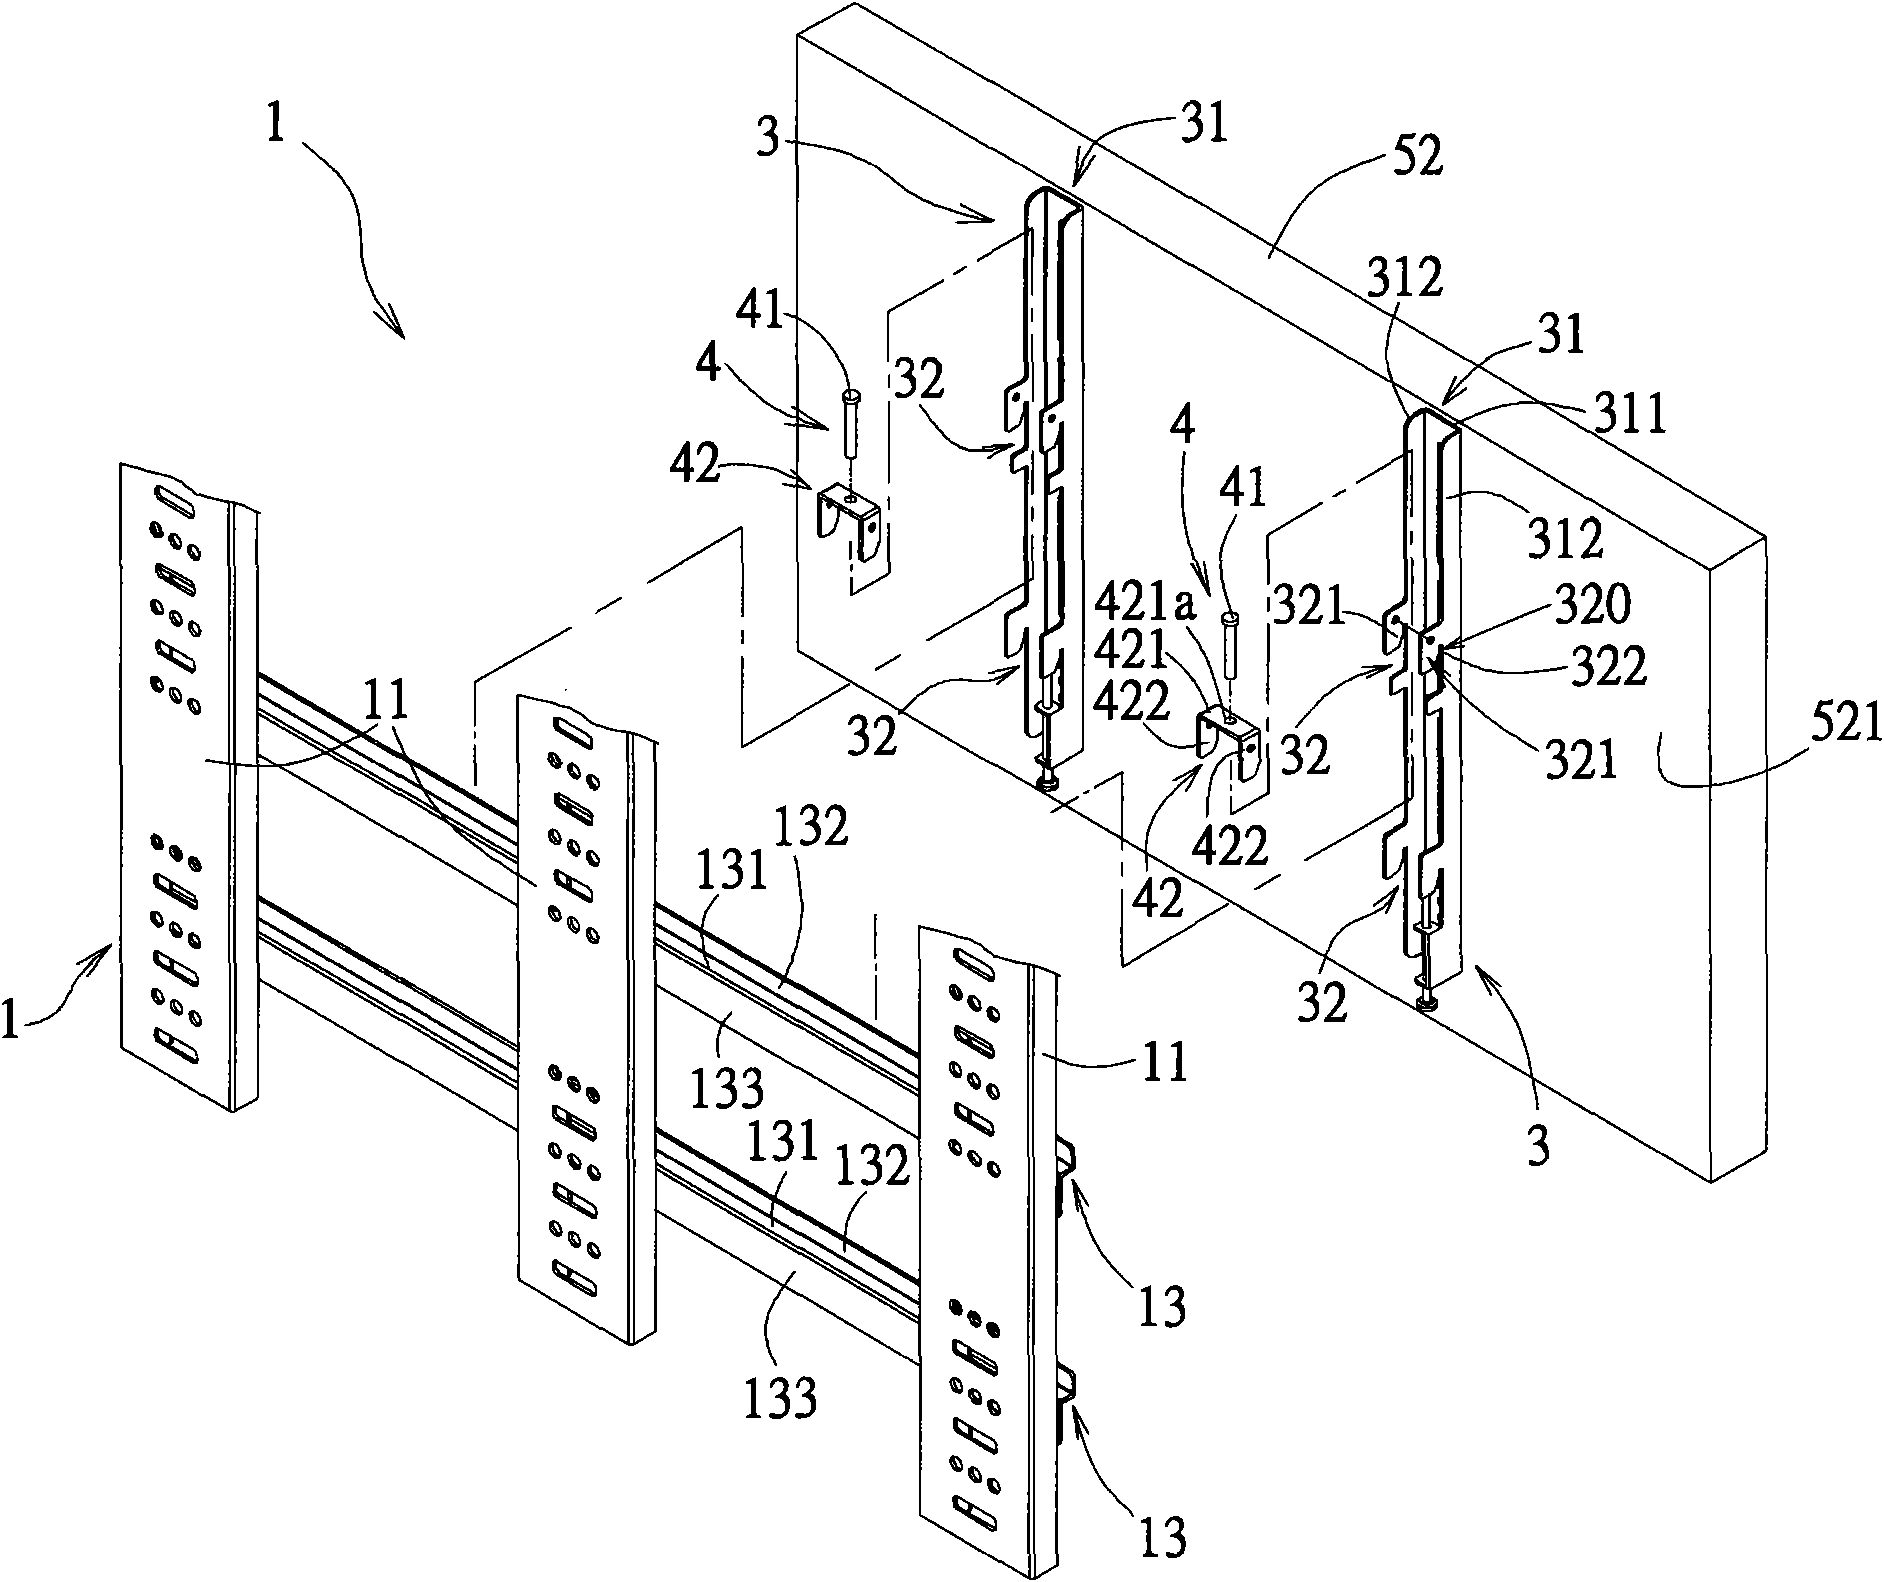 Display rack device